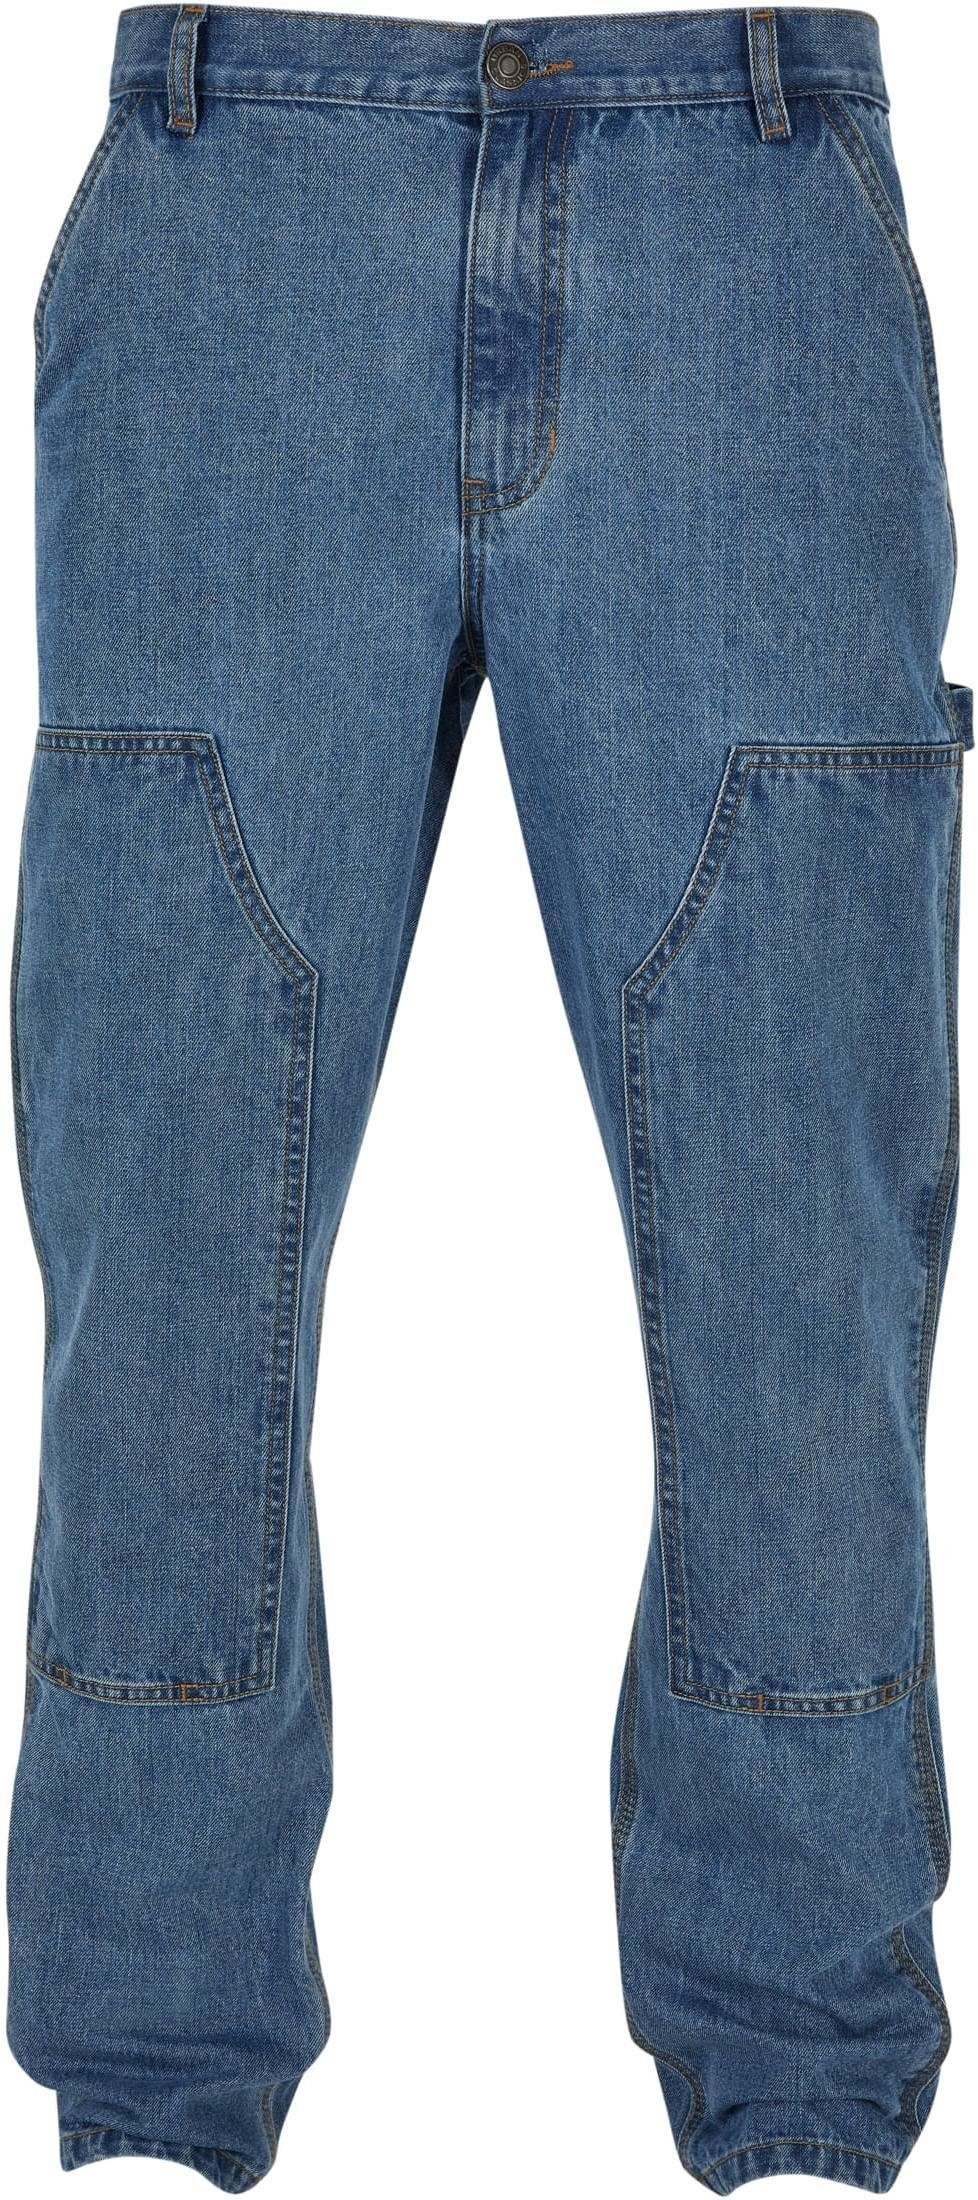 URBAN CLASSICS Funktionshose Double Knee Jeans